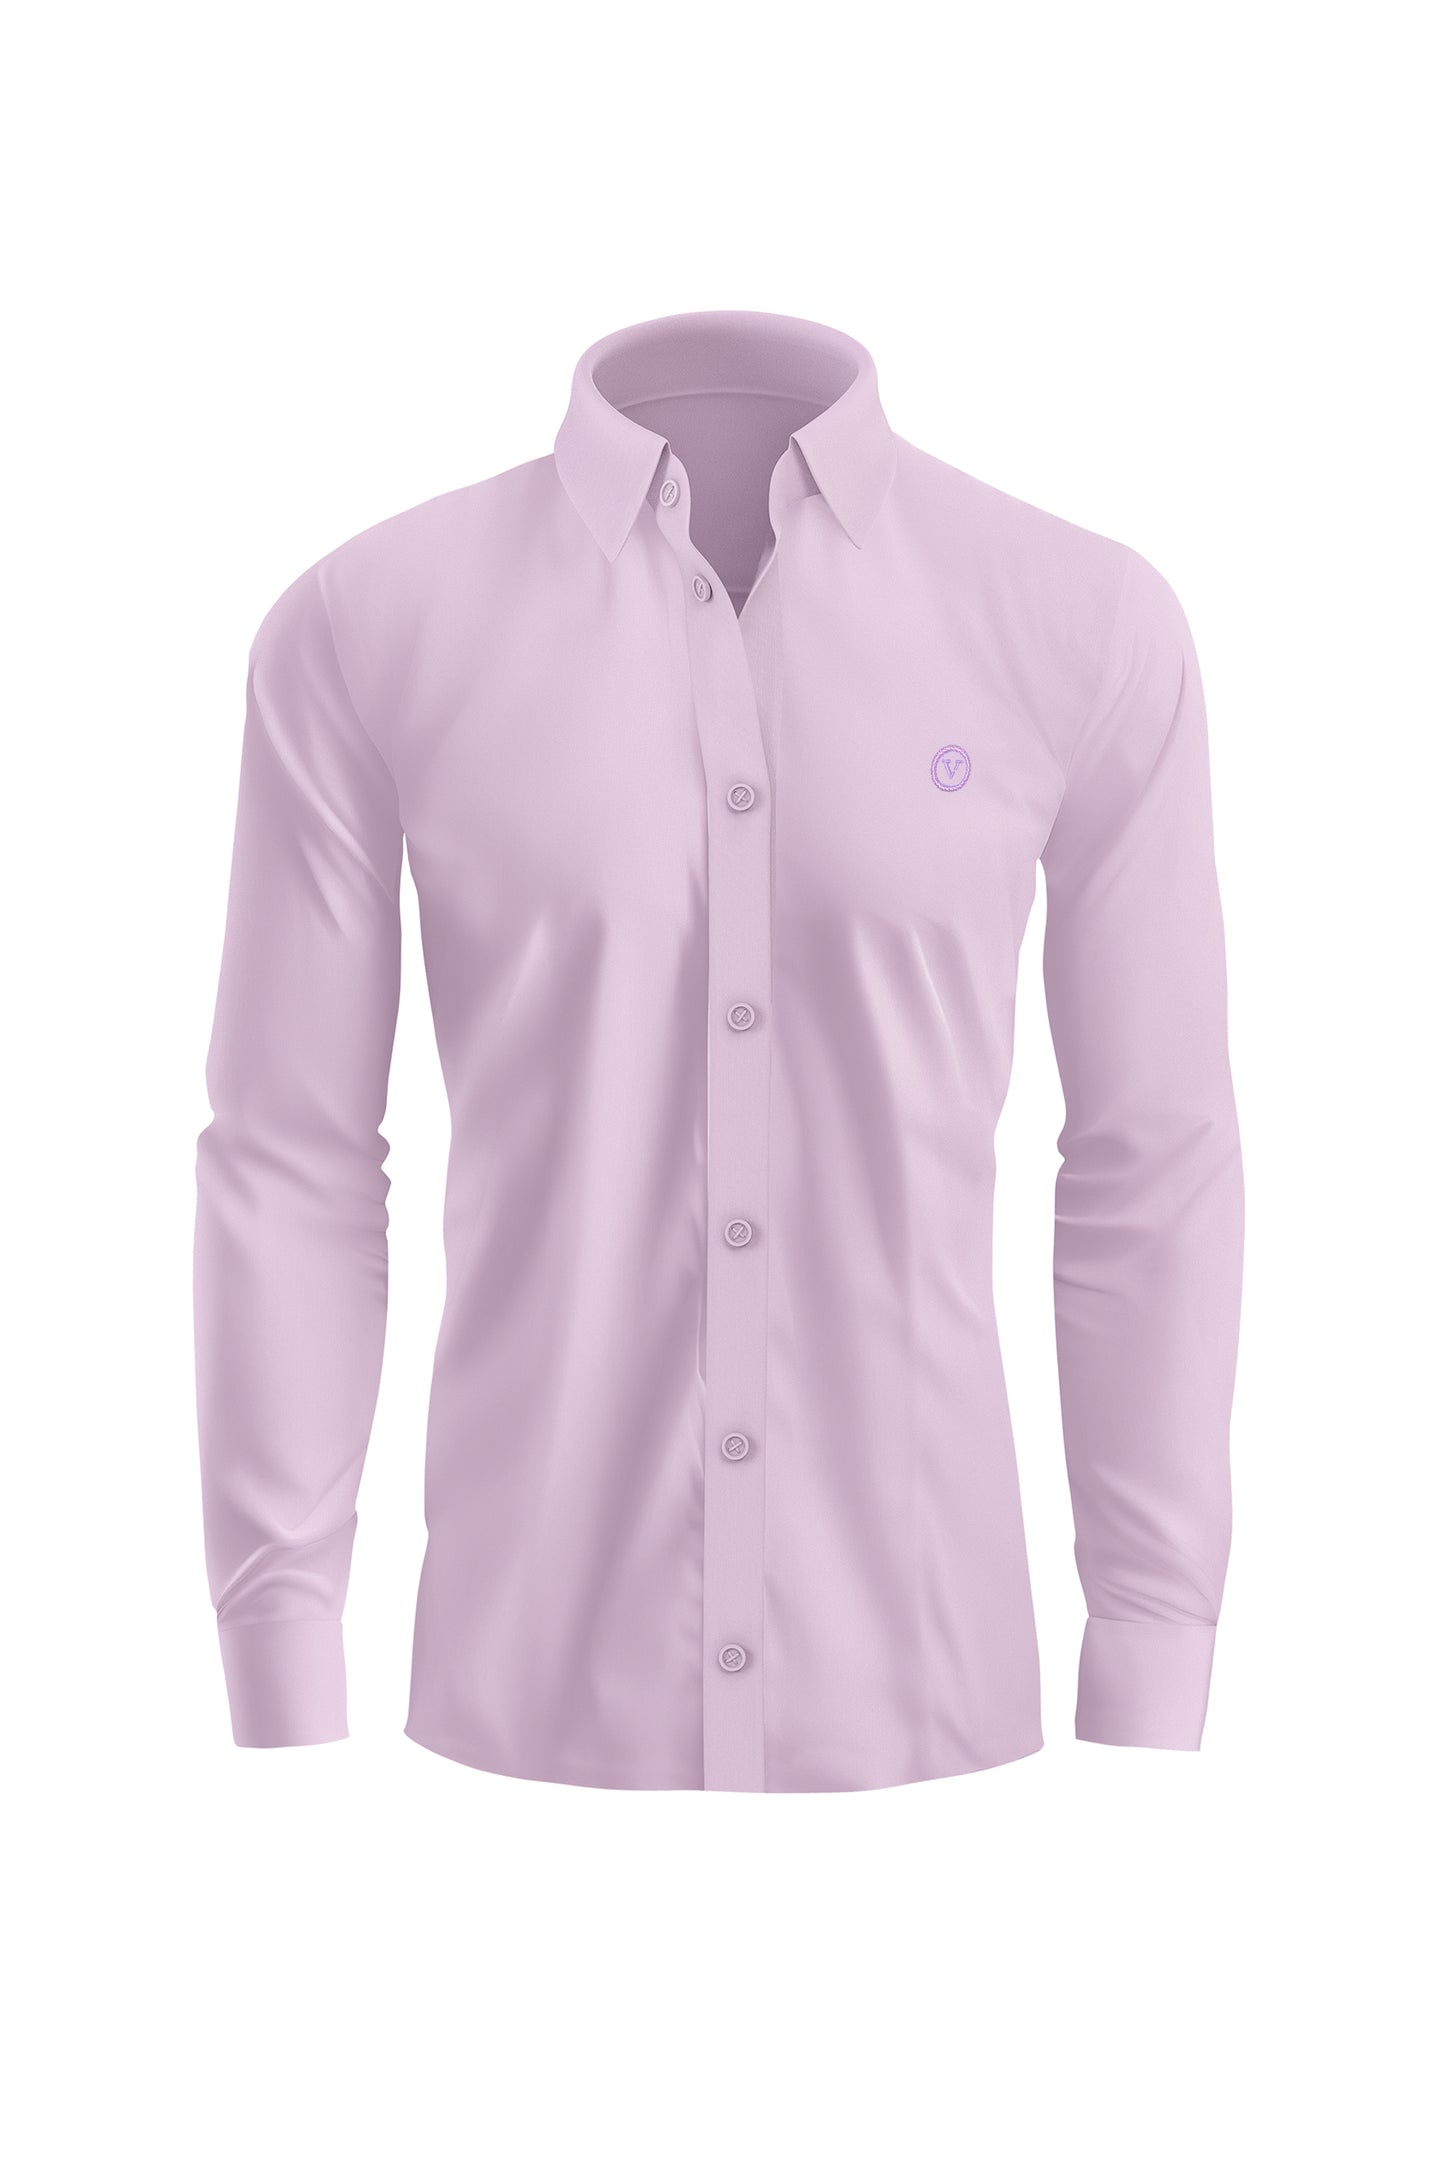 Vercini Savile Row Classic Shirt DRESS SHIRTS On Sale 30% Off Vercini